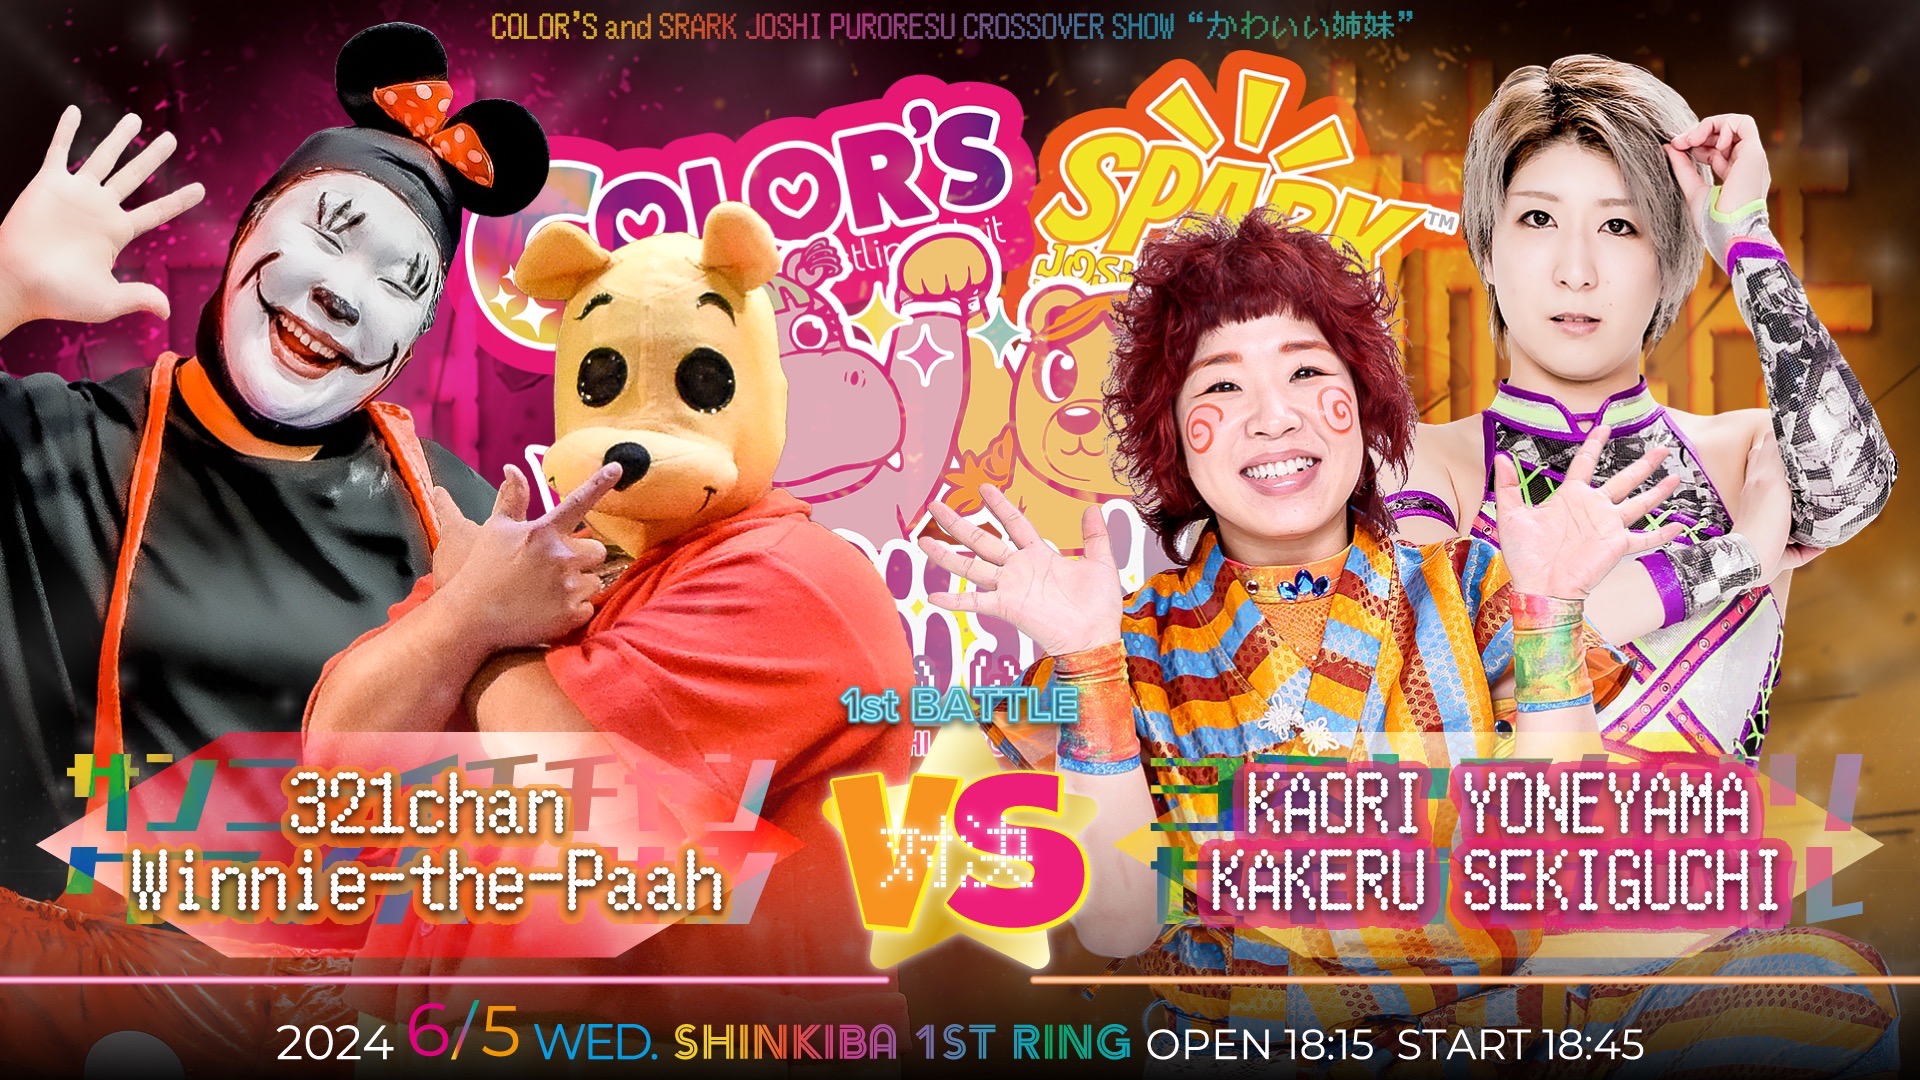 321chan and Winnie the Paah vs Kaori Yoneyama and Kakeru Sekiguchi at COLORS x Spark Joshi